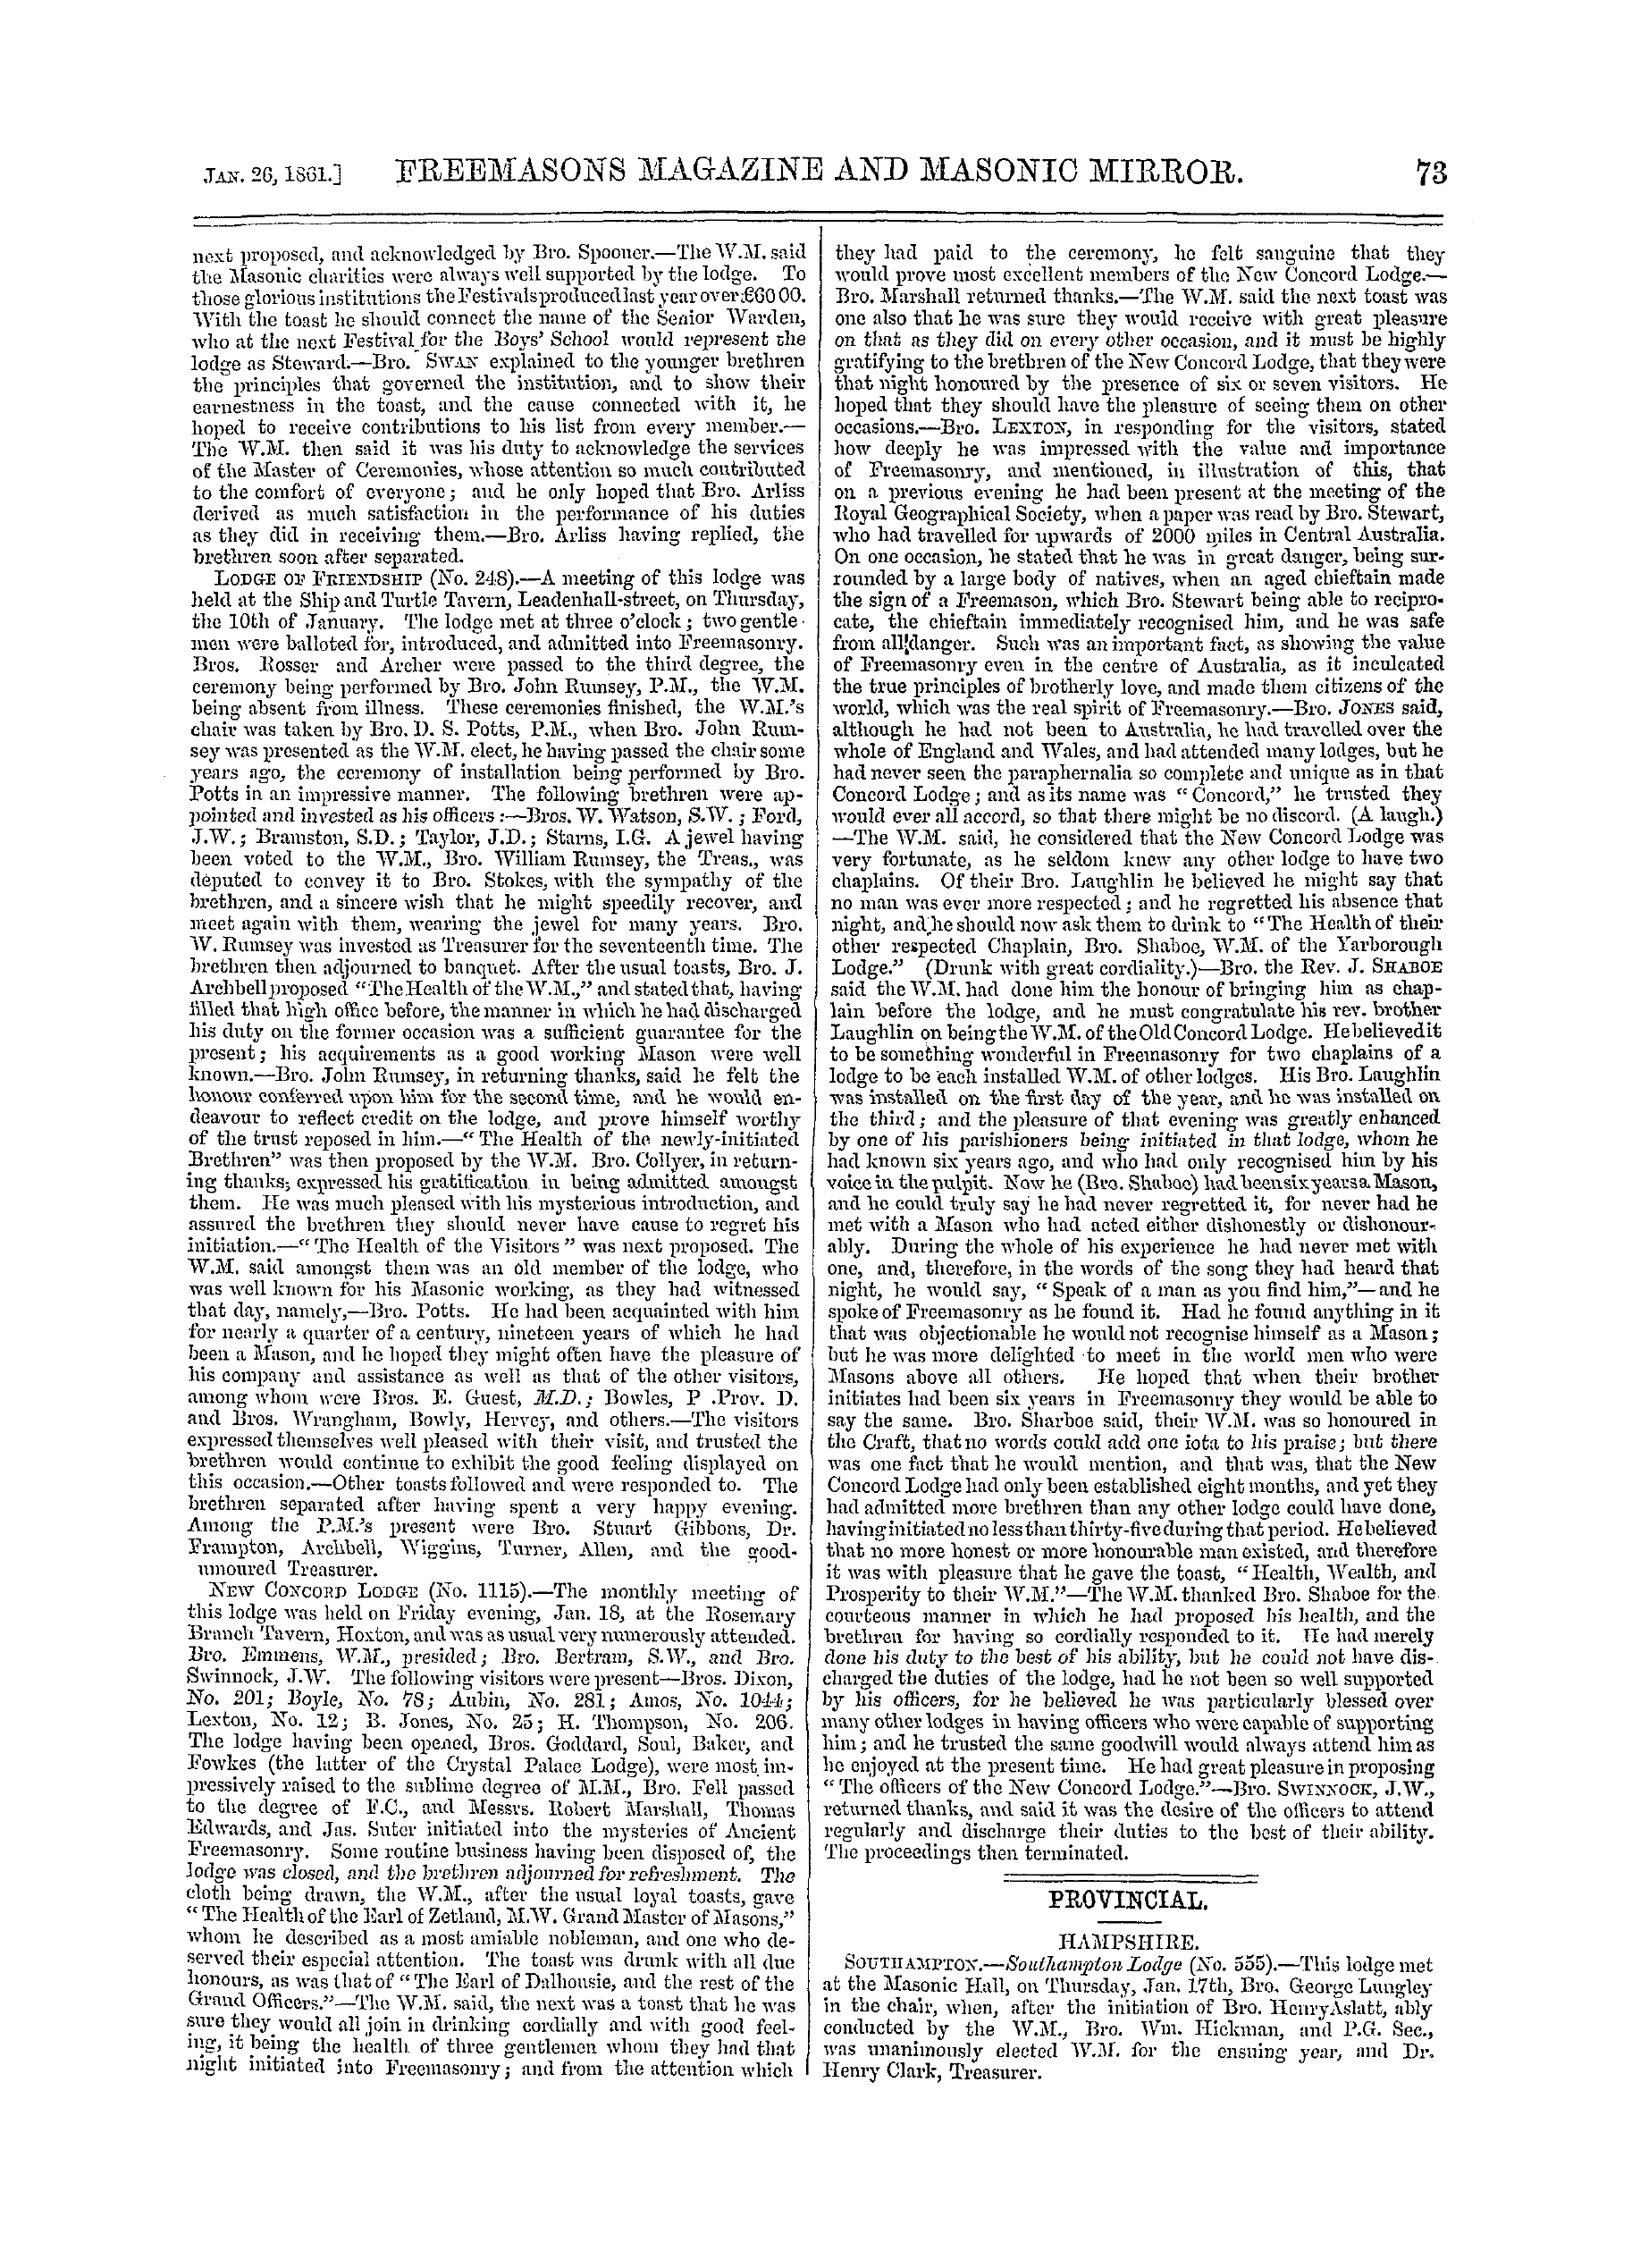 The Freemasons' Monthly Magazine: 1861-01-26 - Metropolitan.